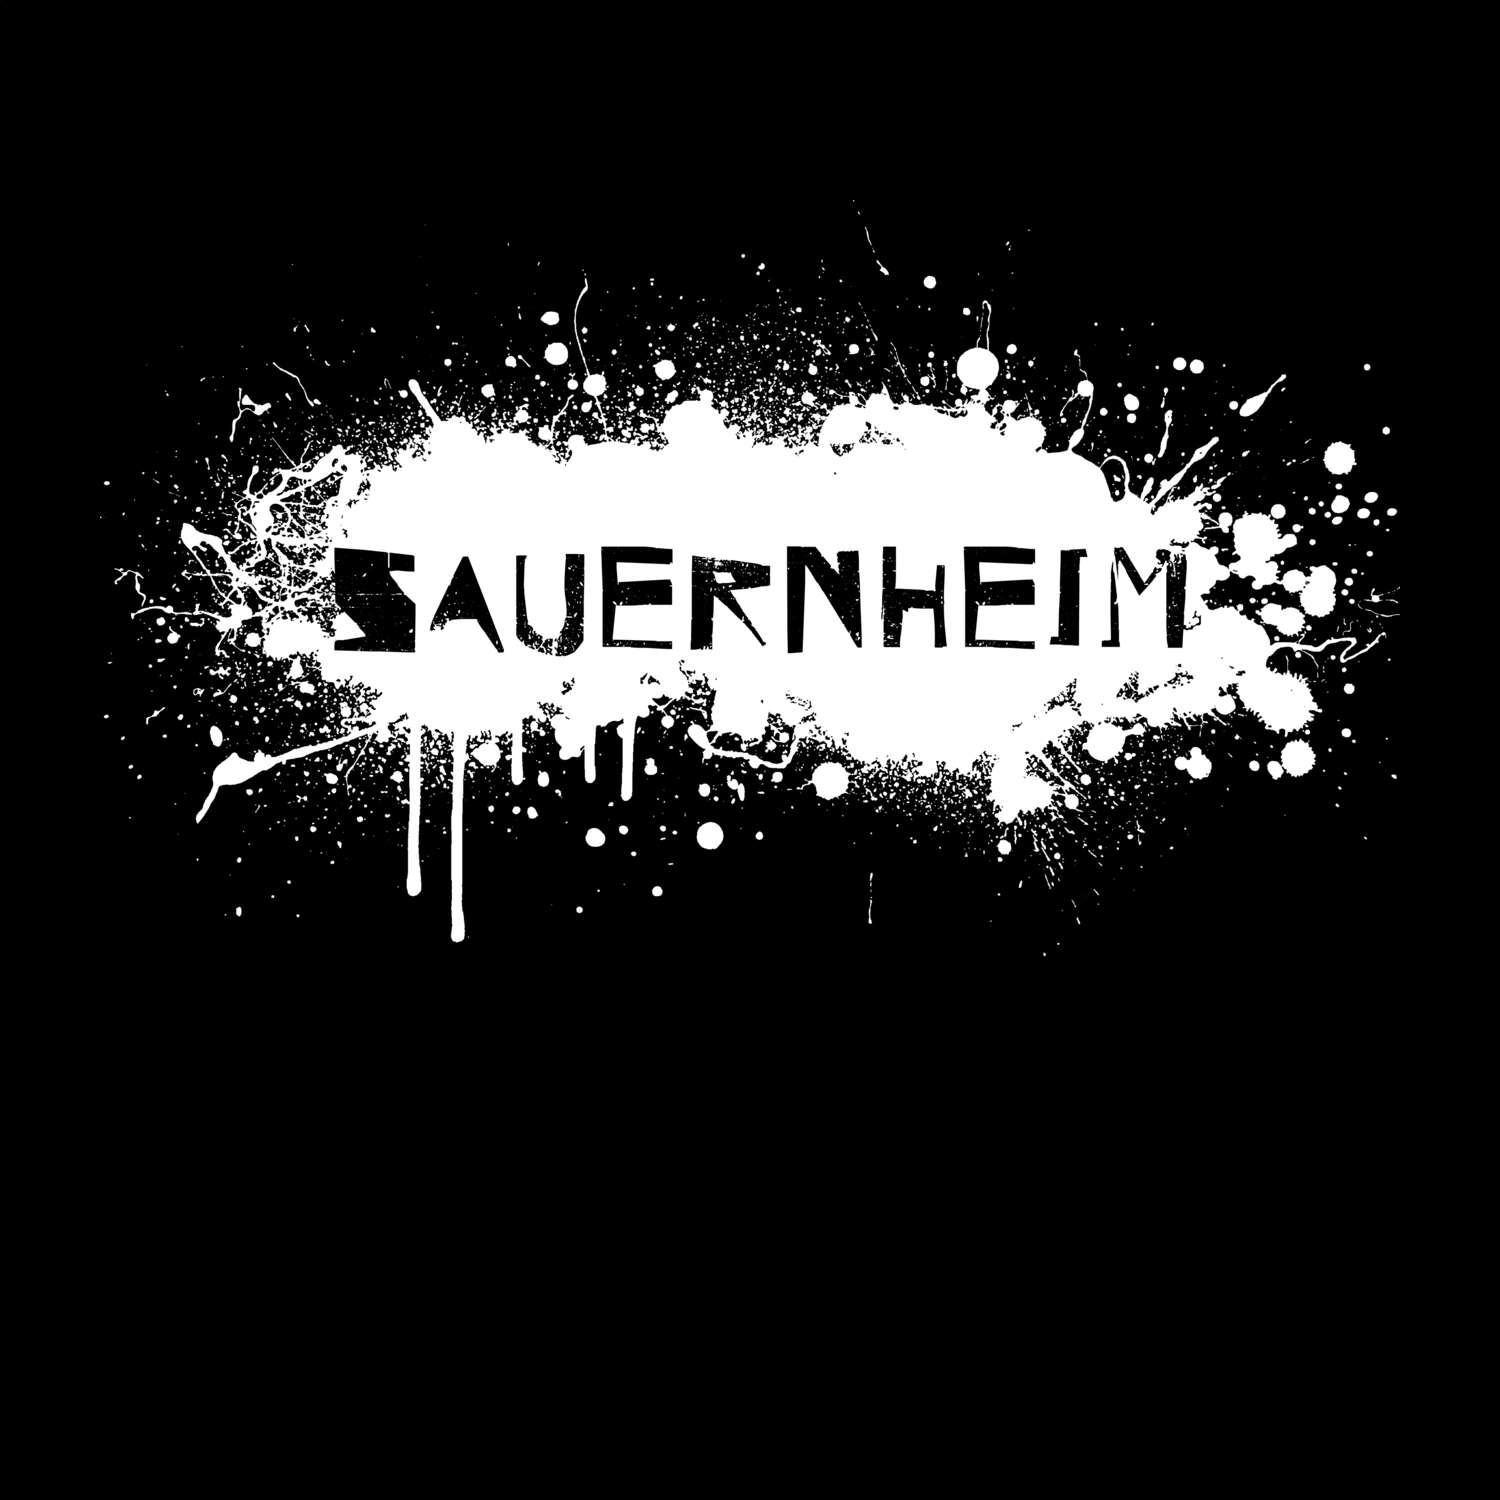 Sauernheim T-Shirt »Paint Splash Punk«